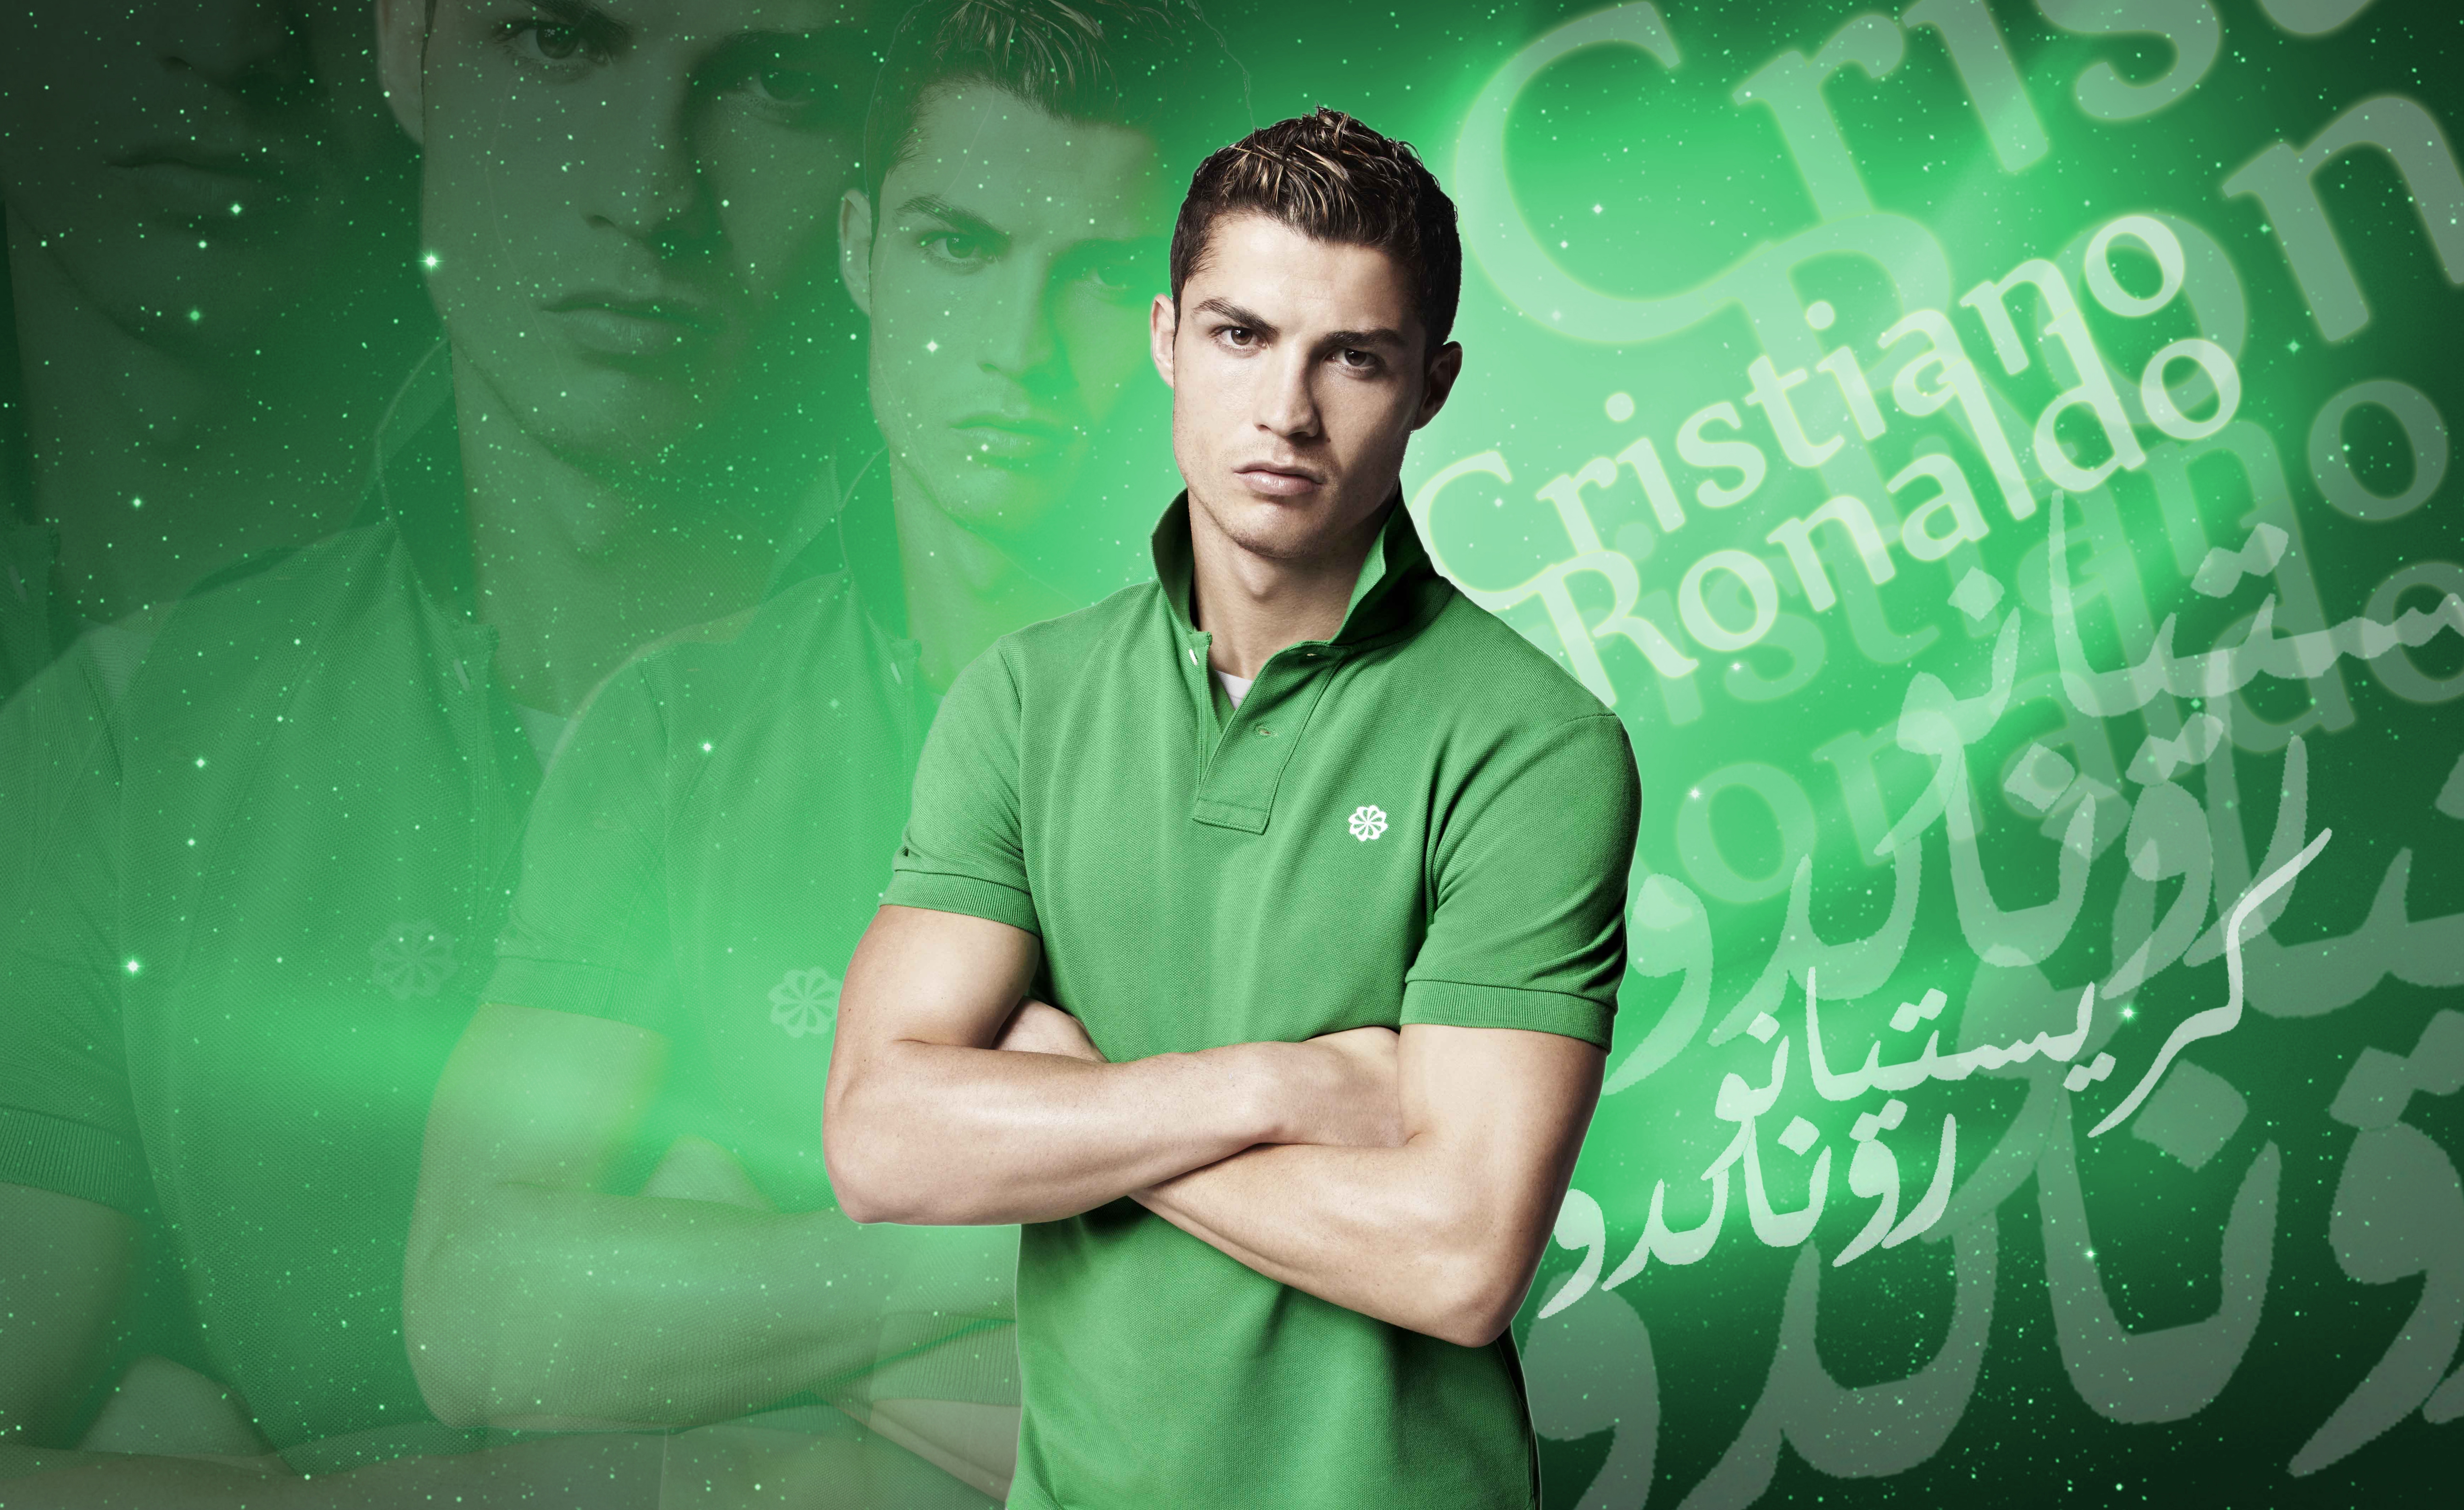 HD wallpaper, Green, Cristiano Ronaldo, Portugal Football Player, Portuguese Soccer Player, 5K, Green Background